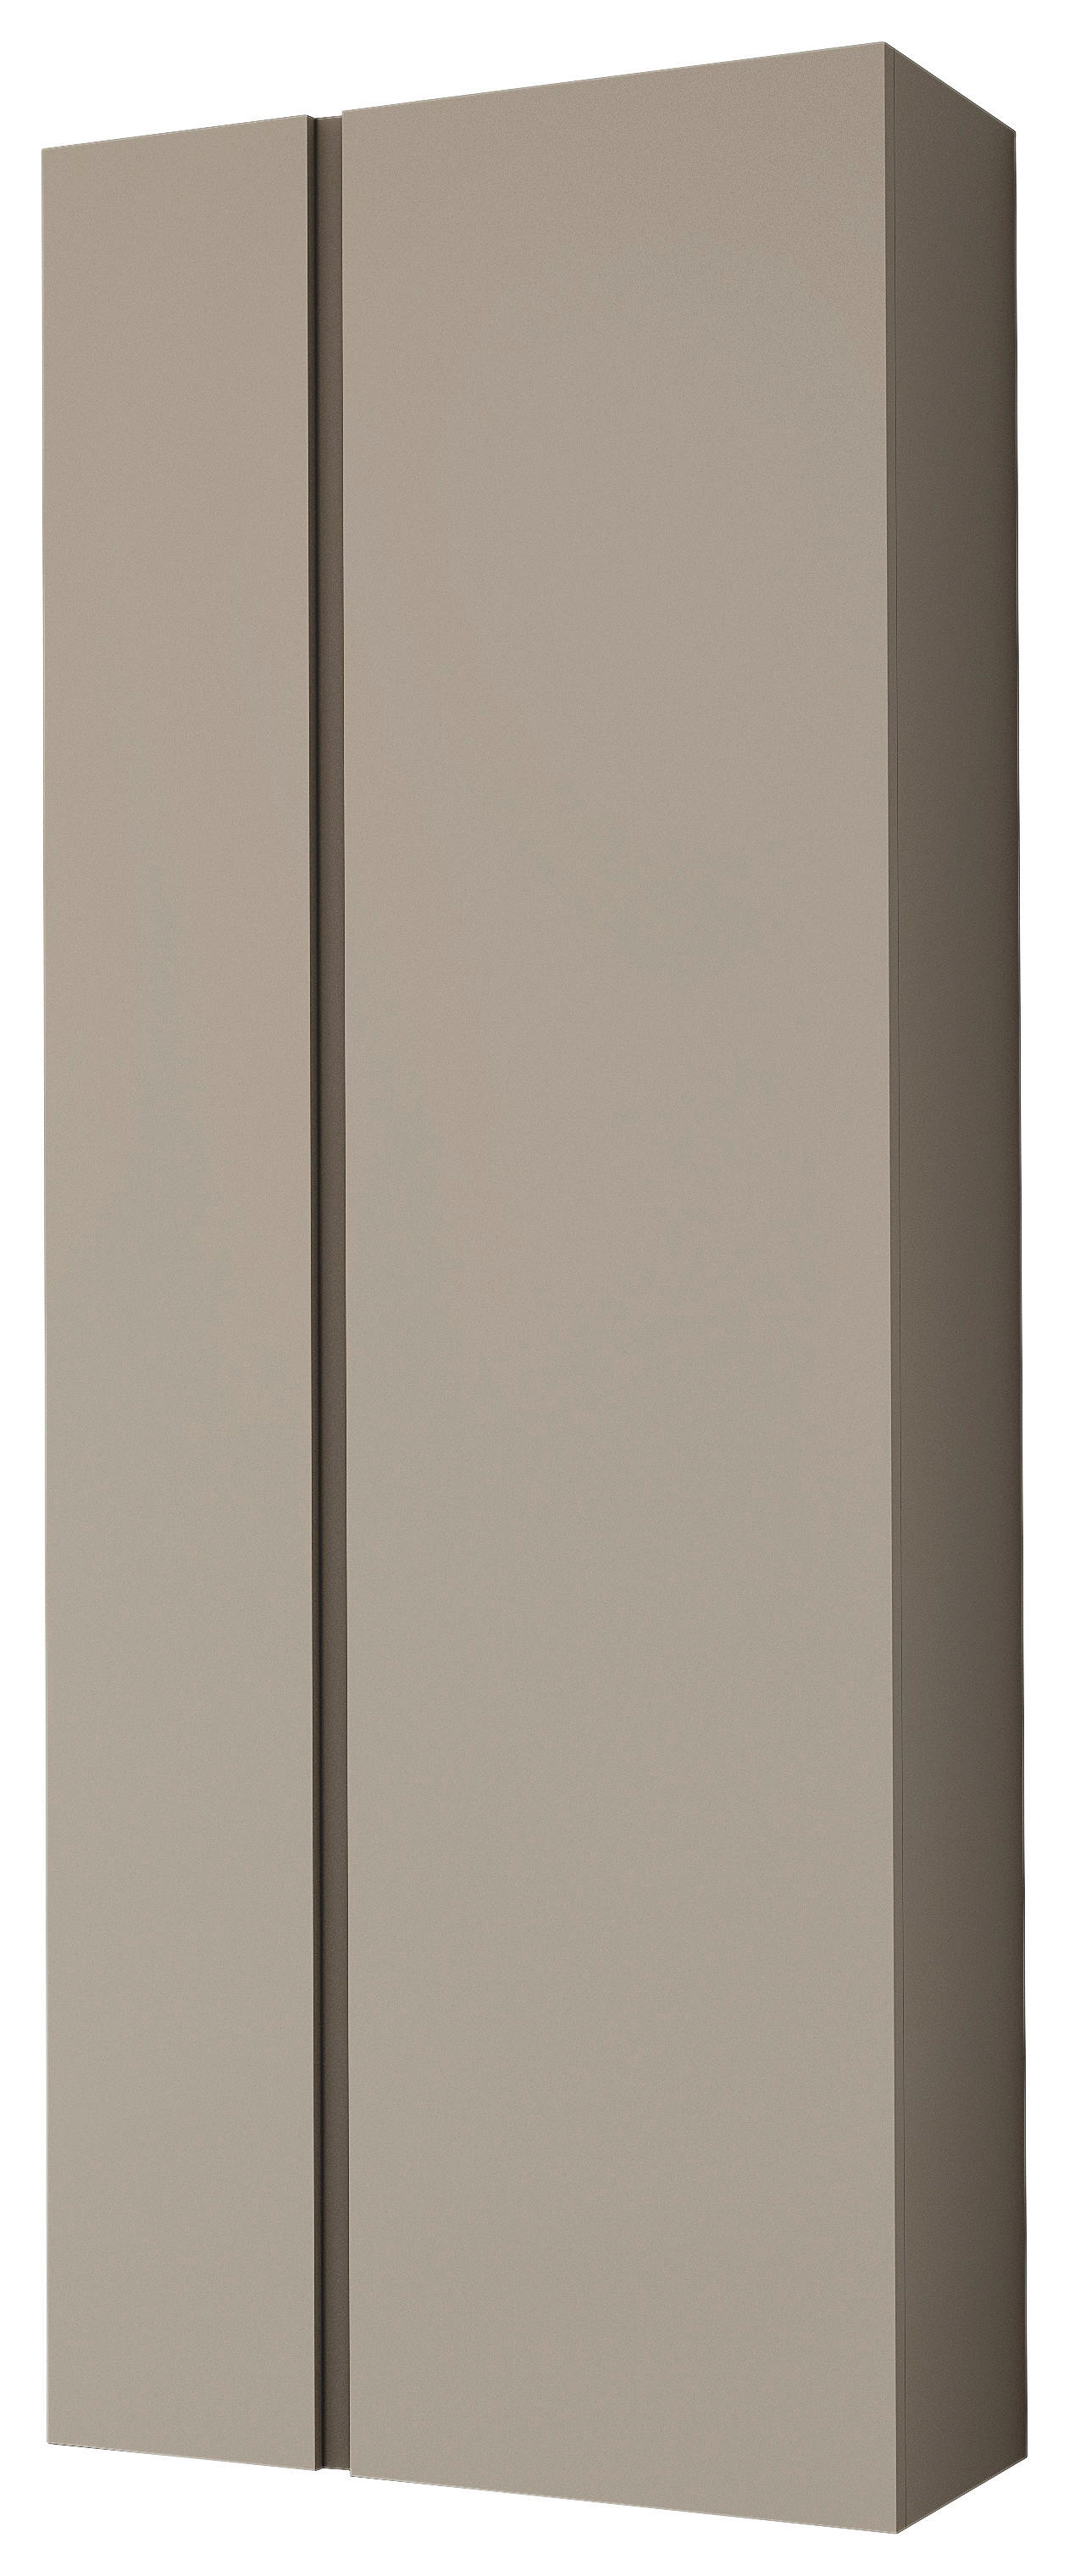 GARDEROBENSCHRANK 60/165/33 cm  - Taupe, Design (60/165/33cm) - Moderano